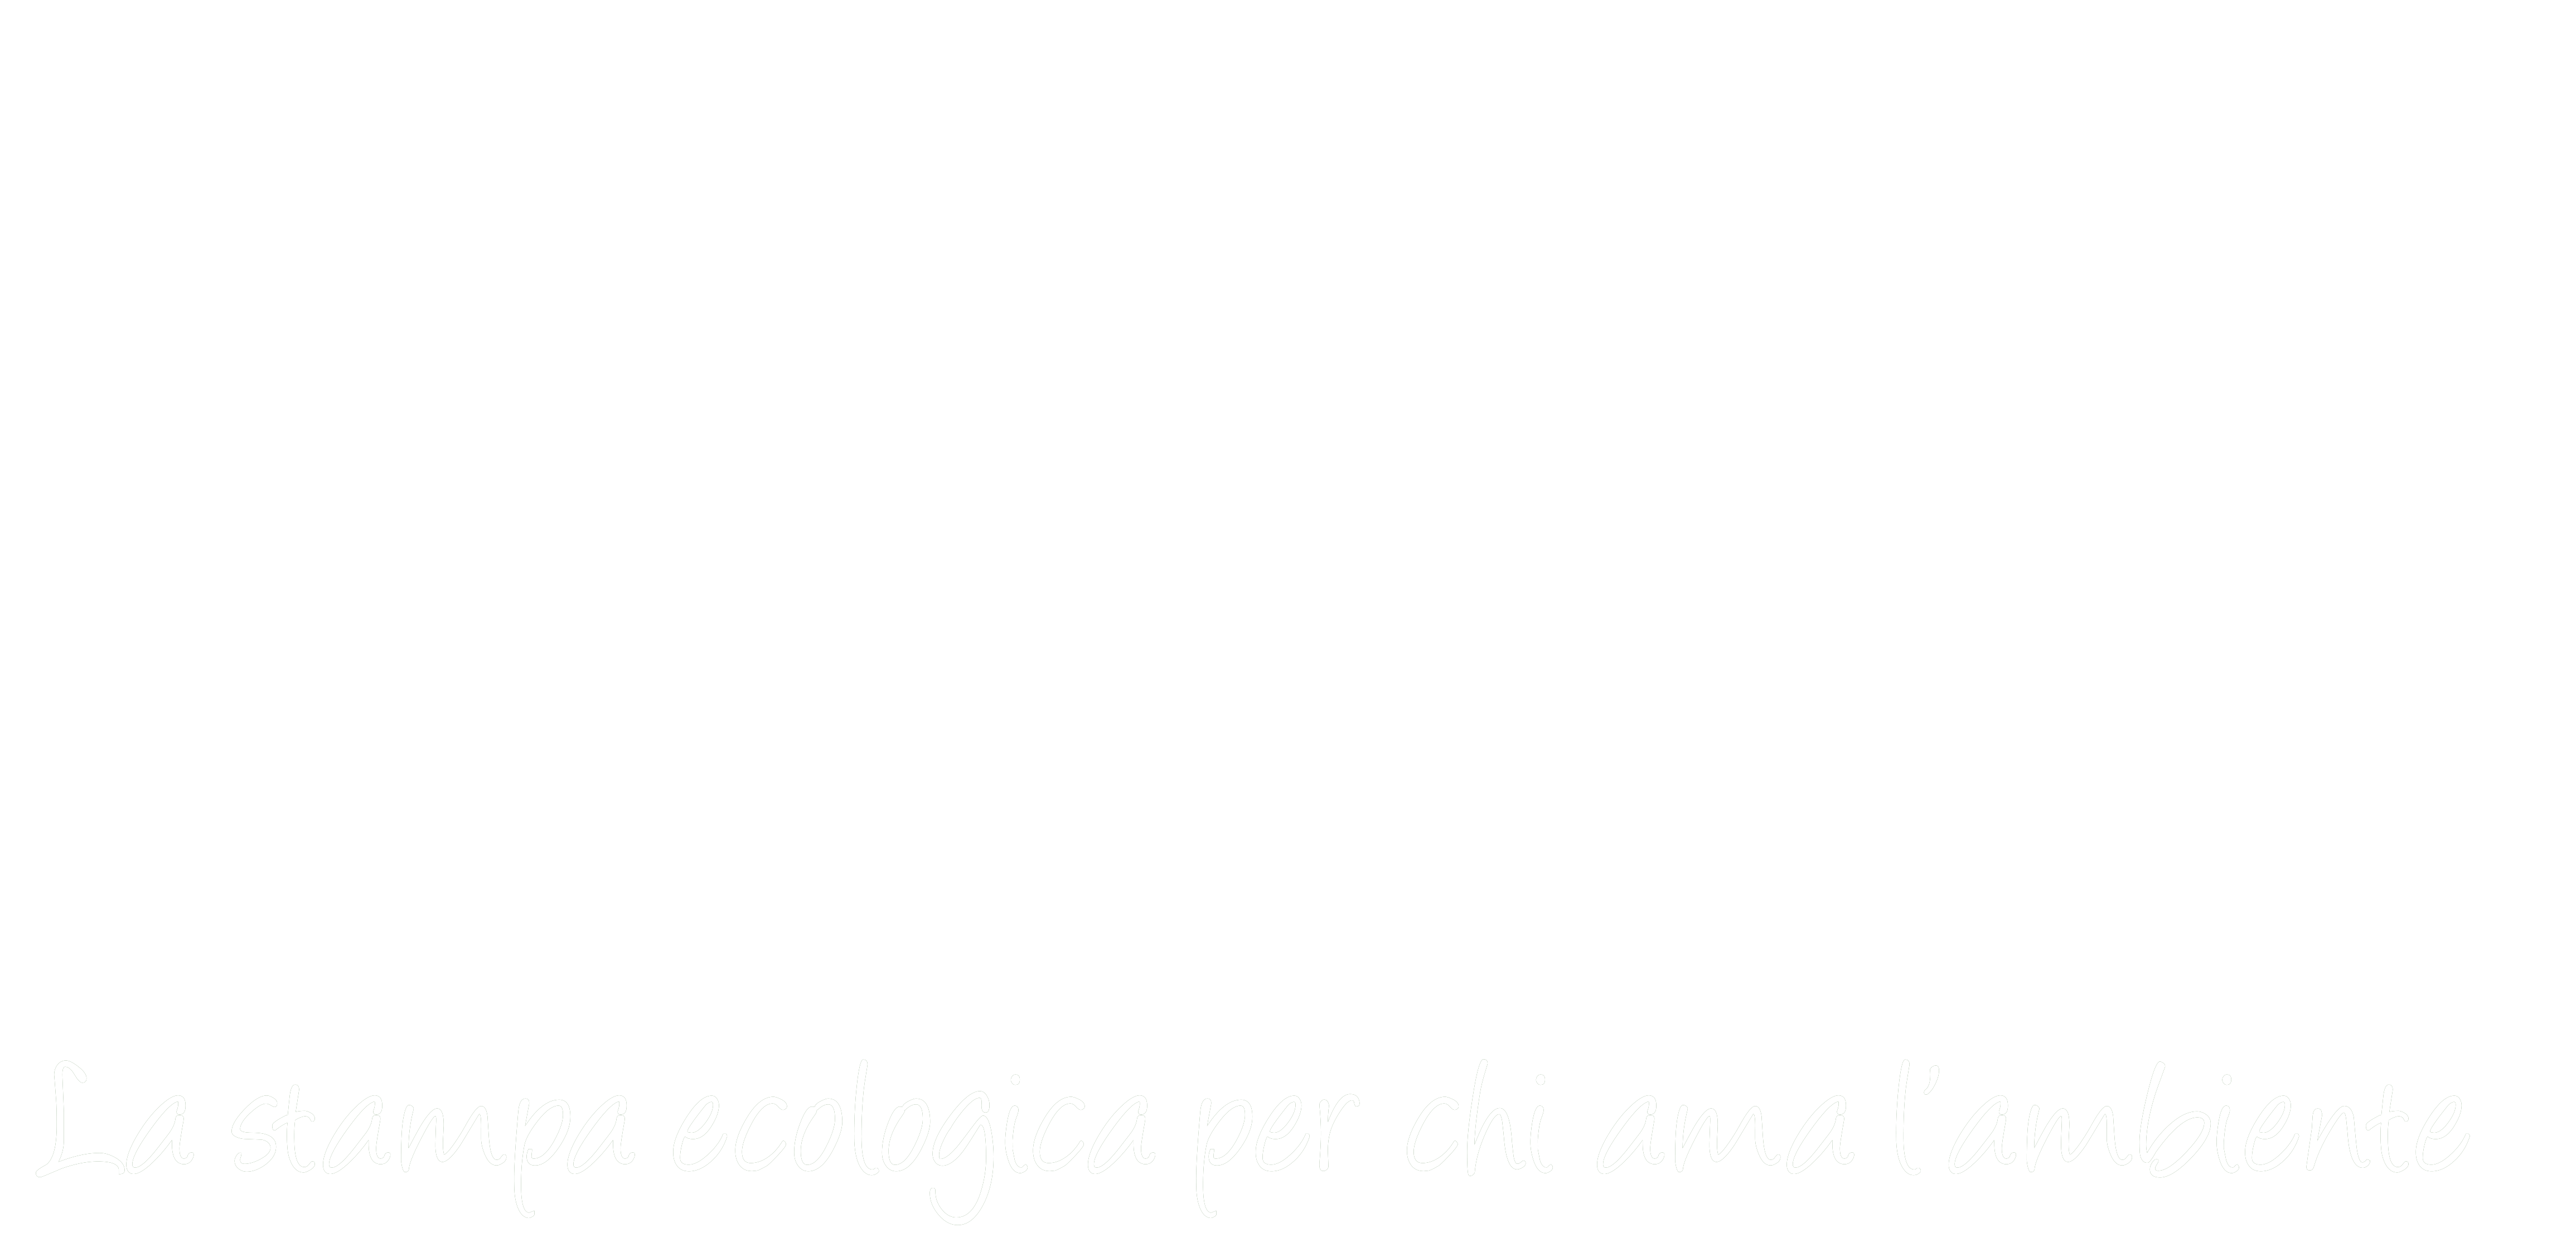 EcoGreenStampa - stampa ecologica a Bergamo